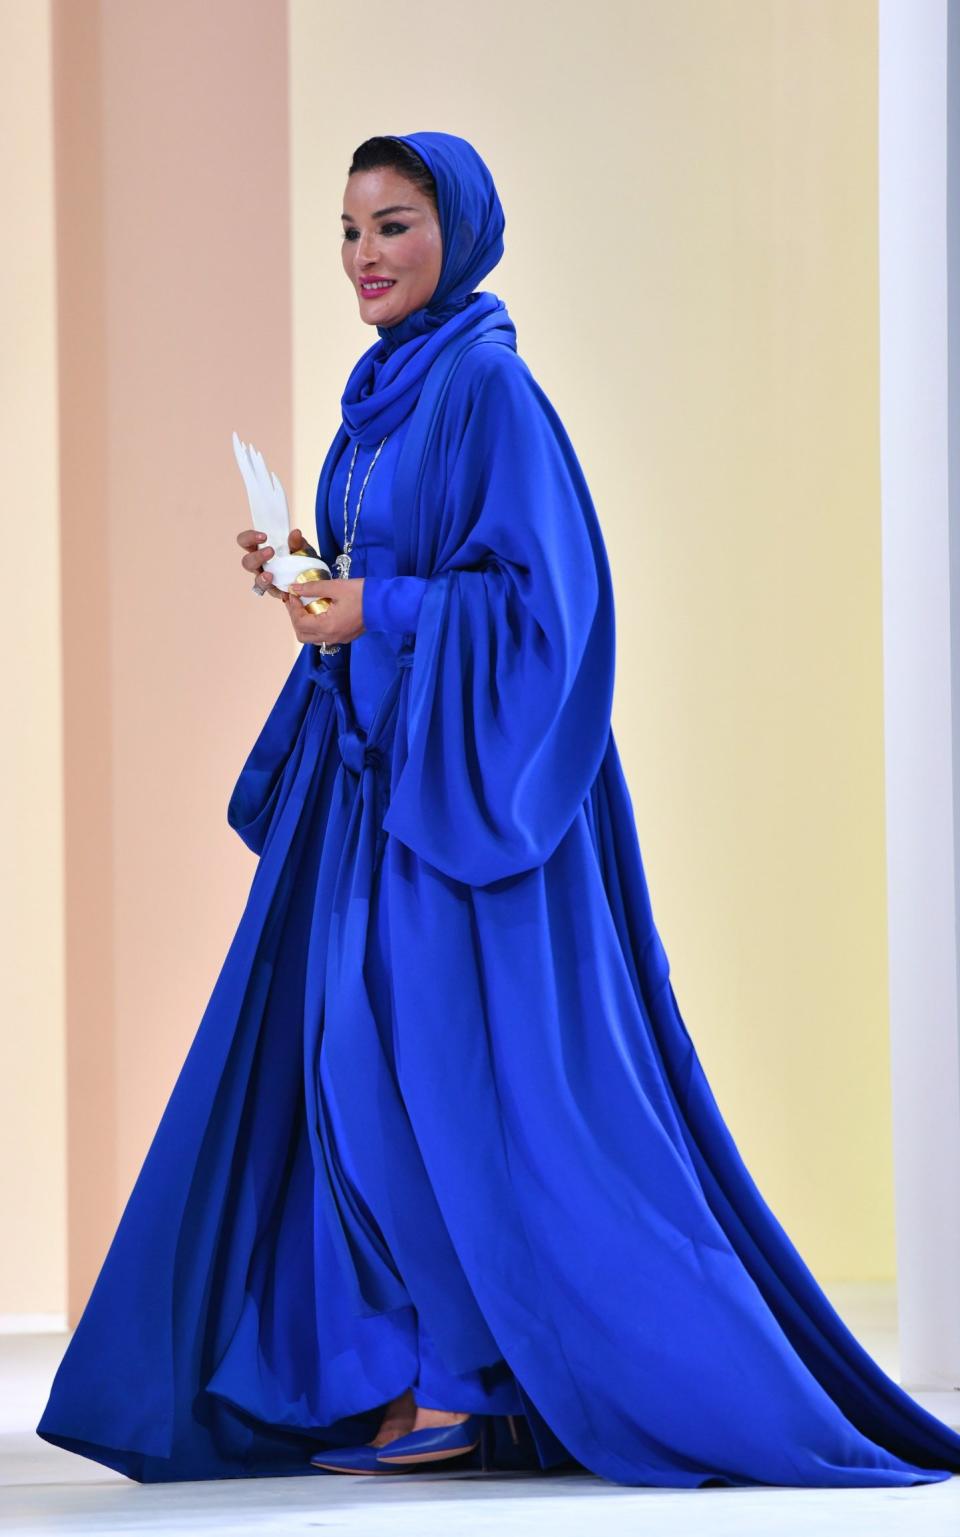 Her Highness Sheikha Moza bint Nasser at the Fashion Trust Arabia Prize Gala in Doha - Craig Barritt